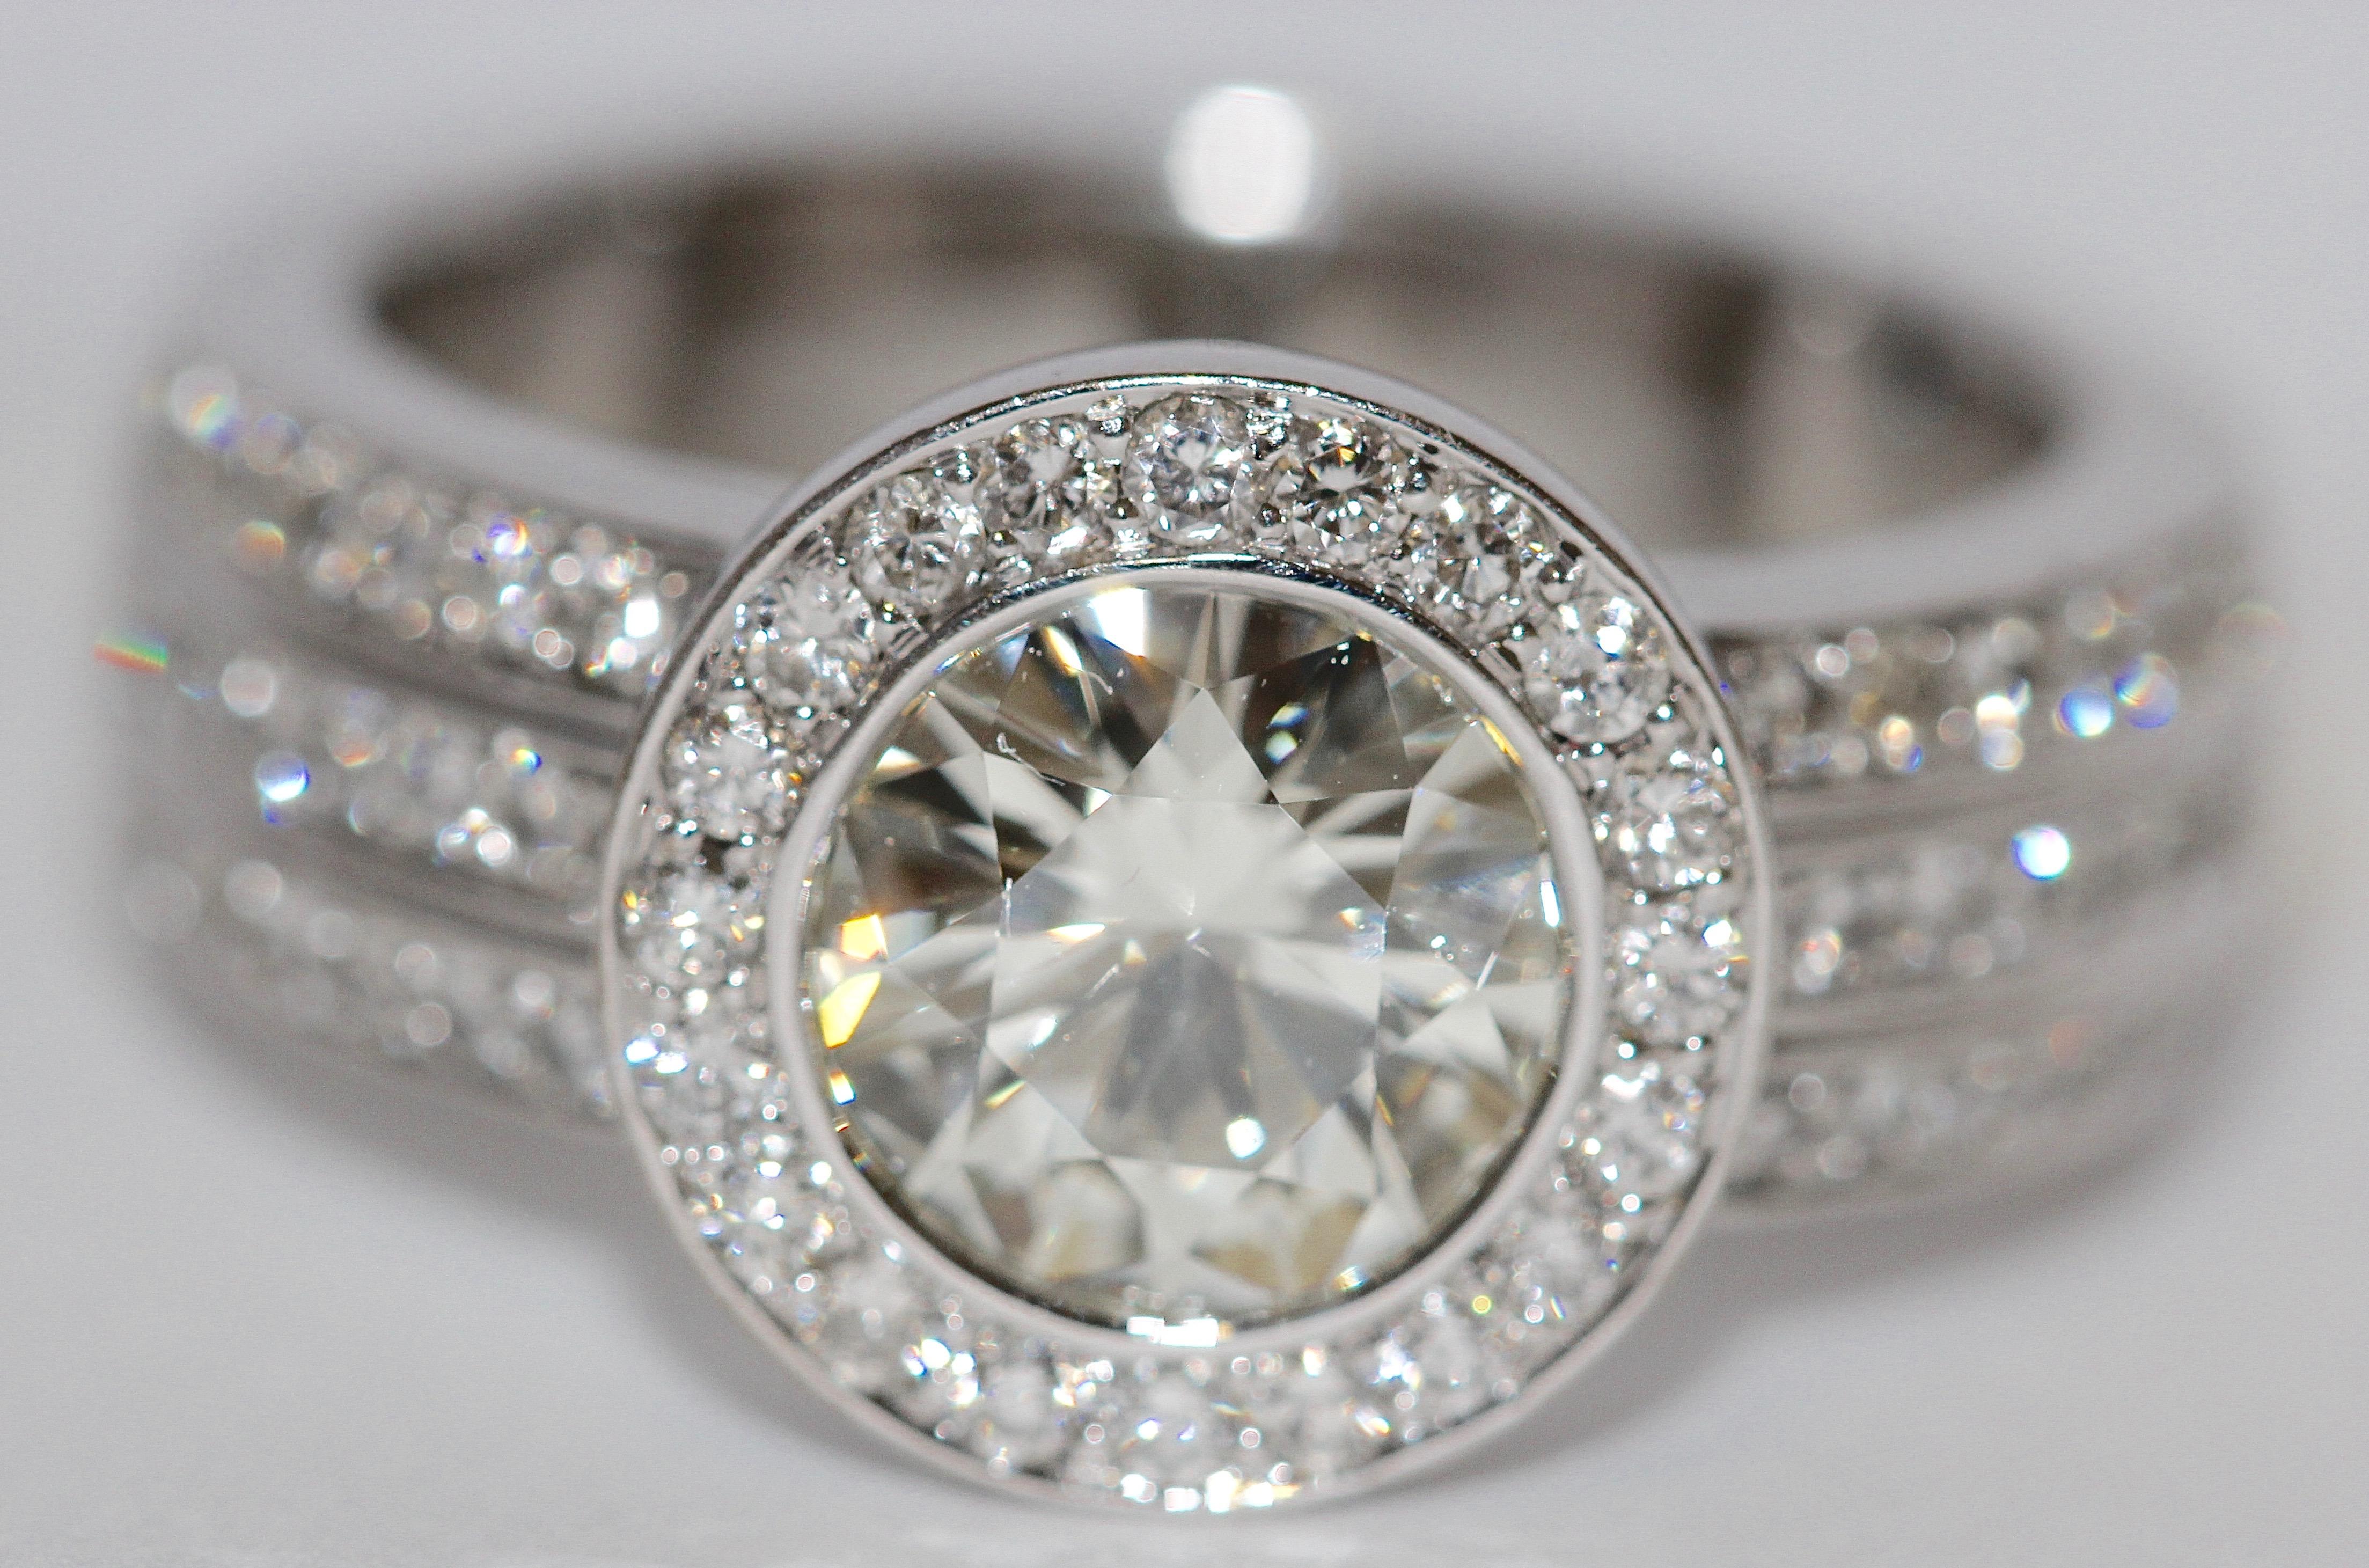 2.1 carat diamond ring